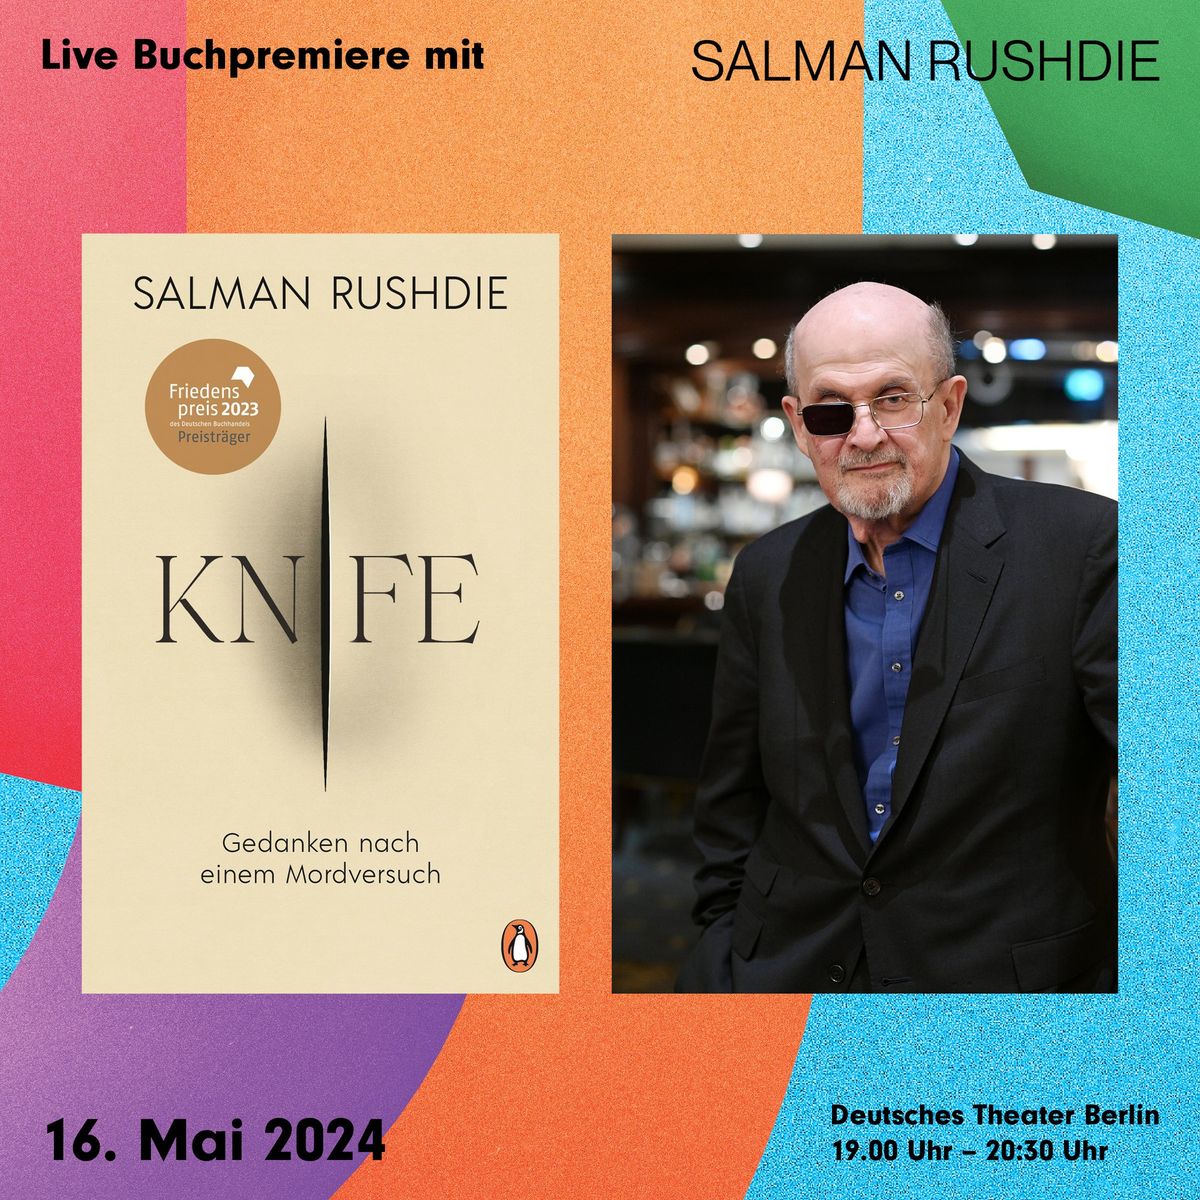 Salman Rushdie: Buchpremiere "Knife"